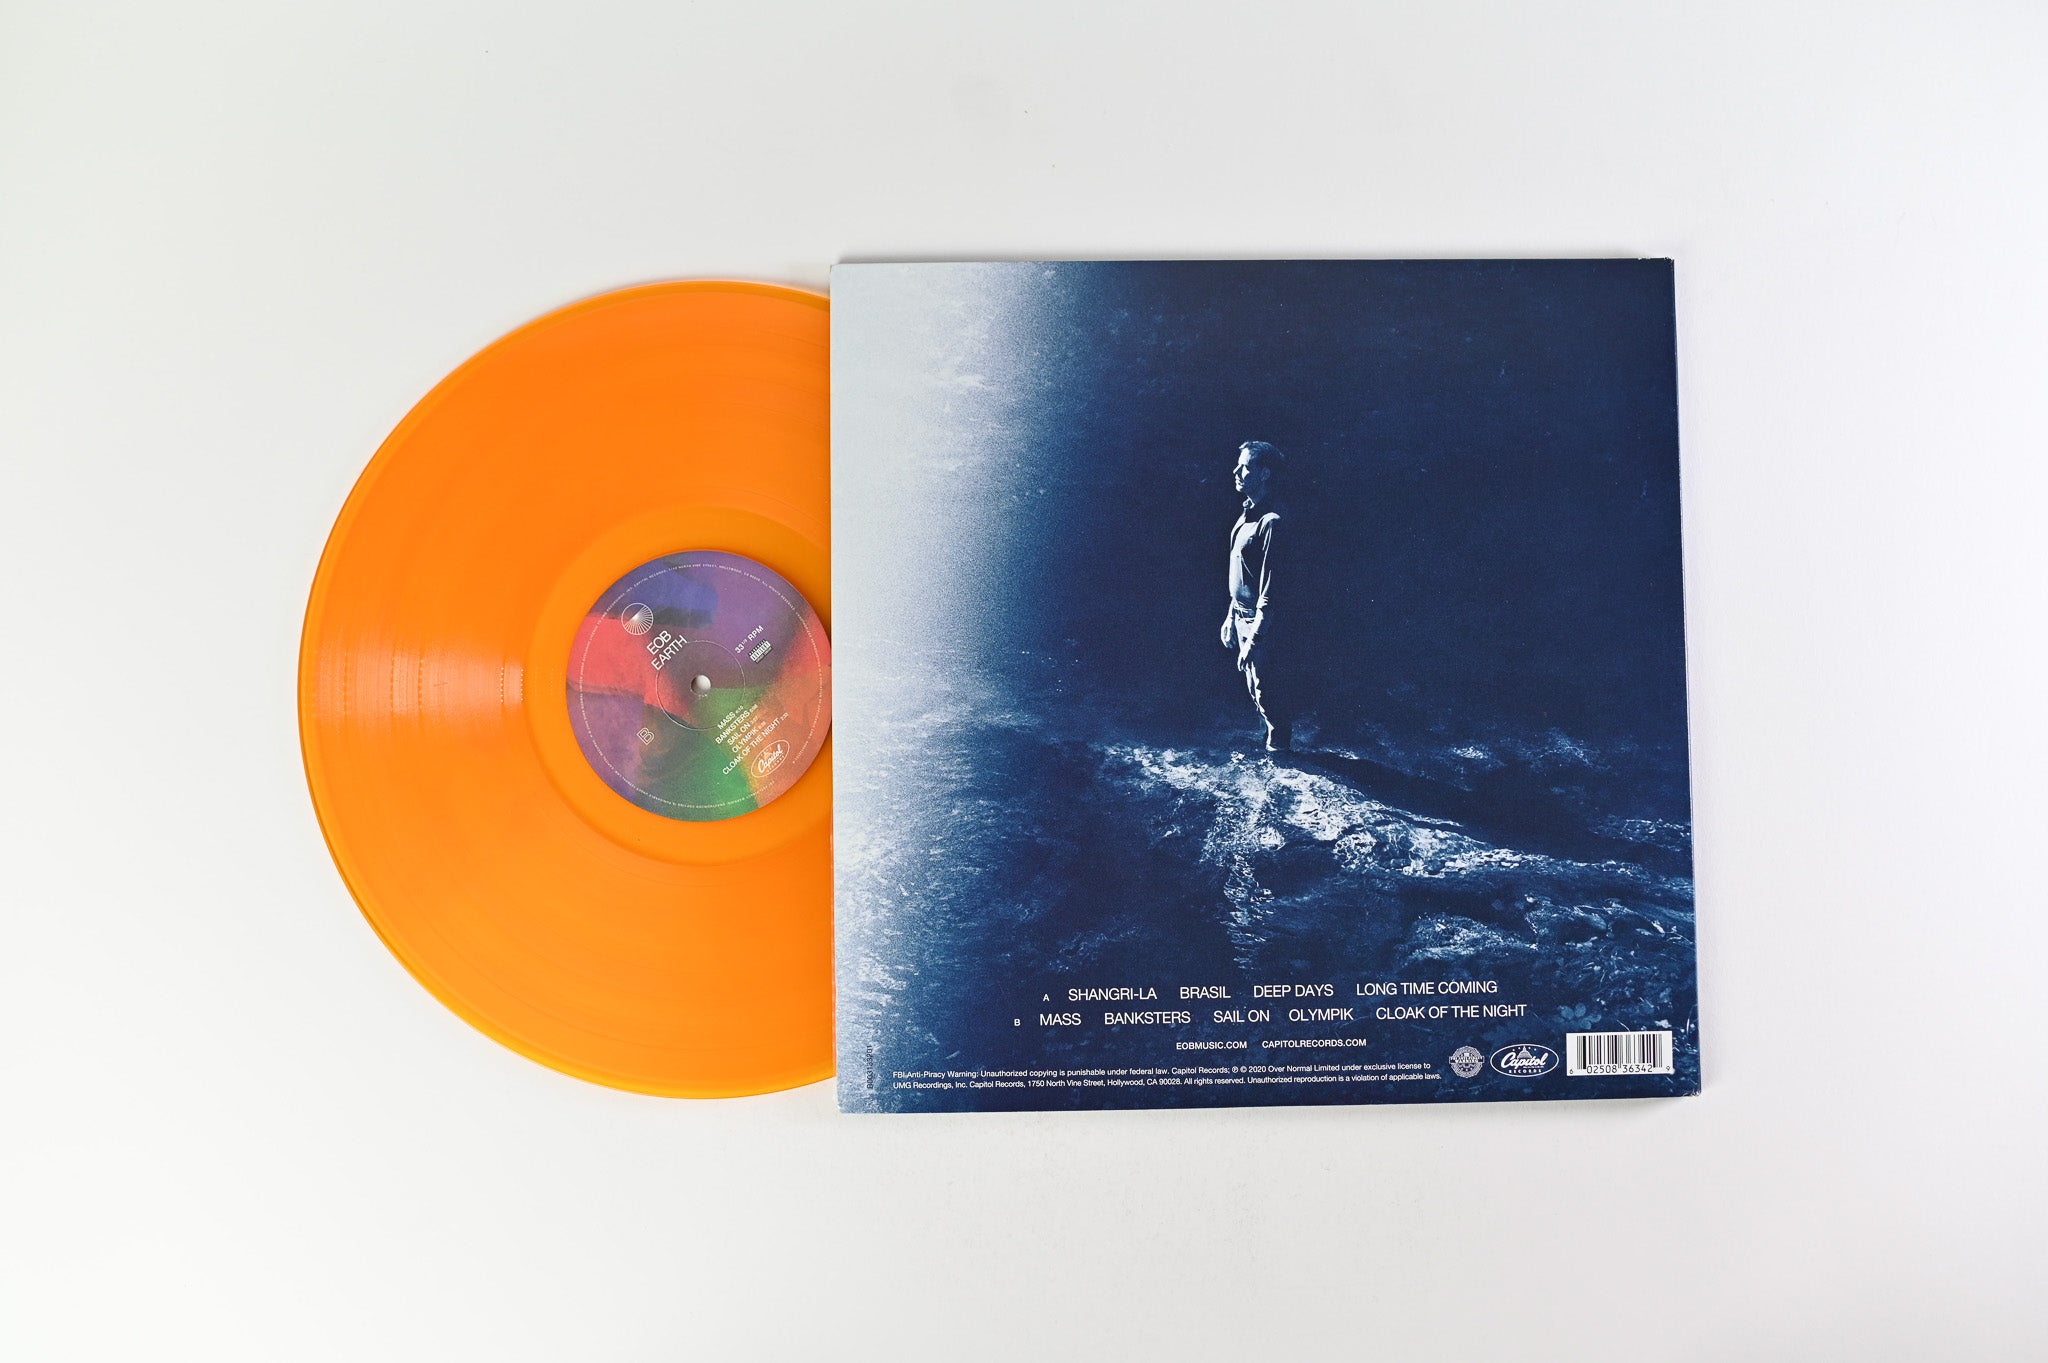 Ed O'Brien - Earth on Capitol Ltd Orange Vinyl